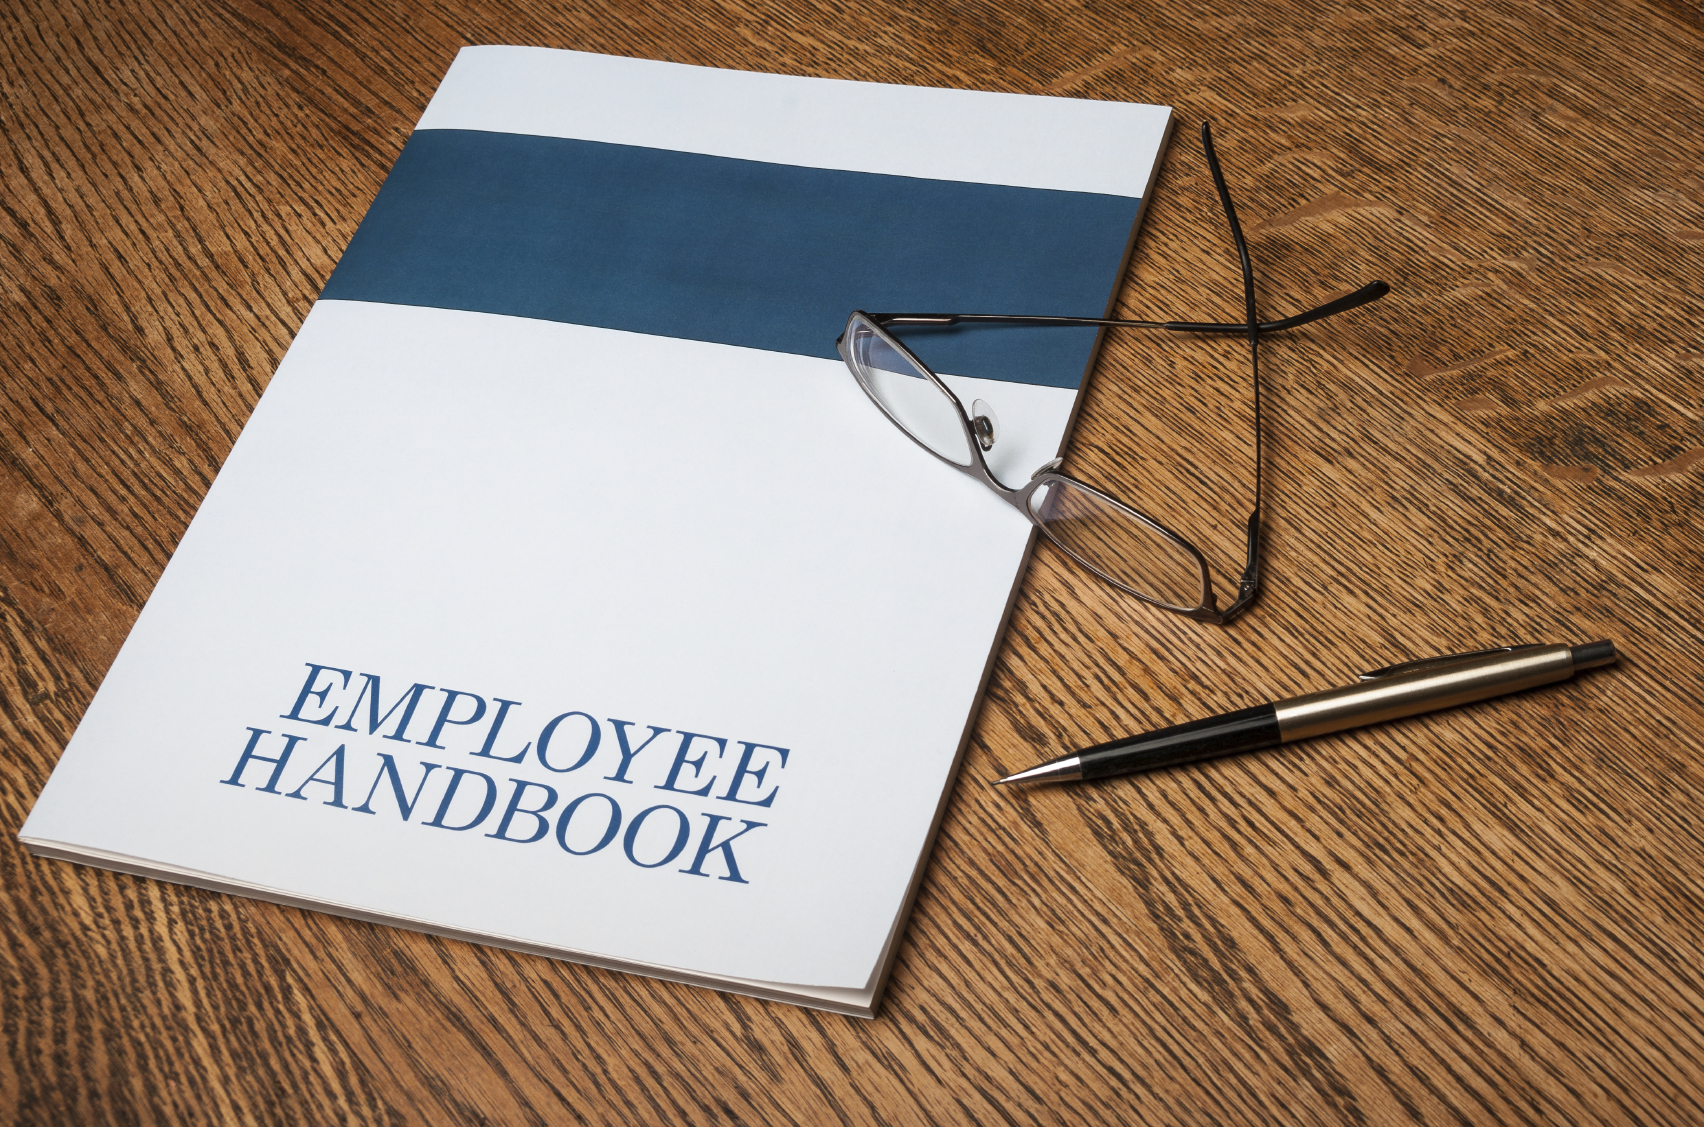 Employee handbook